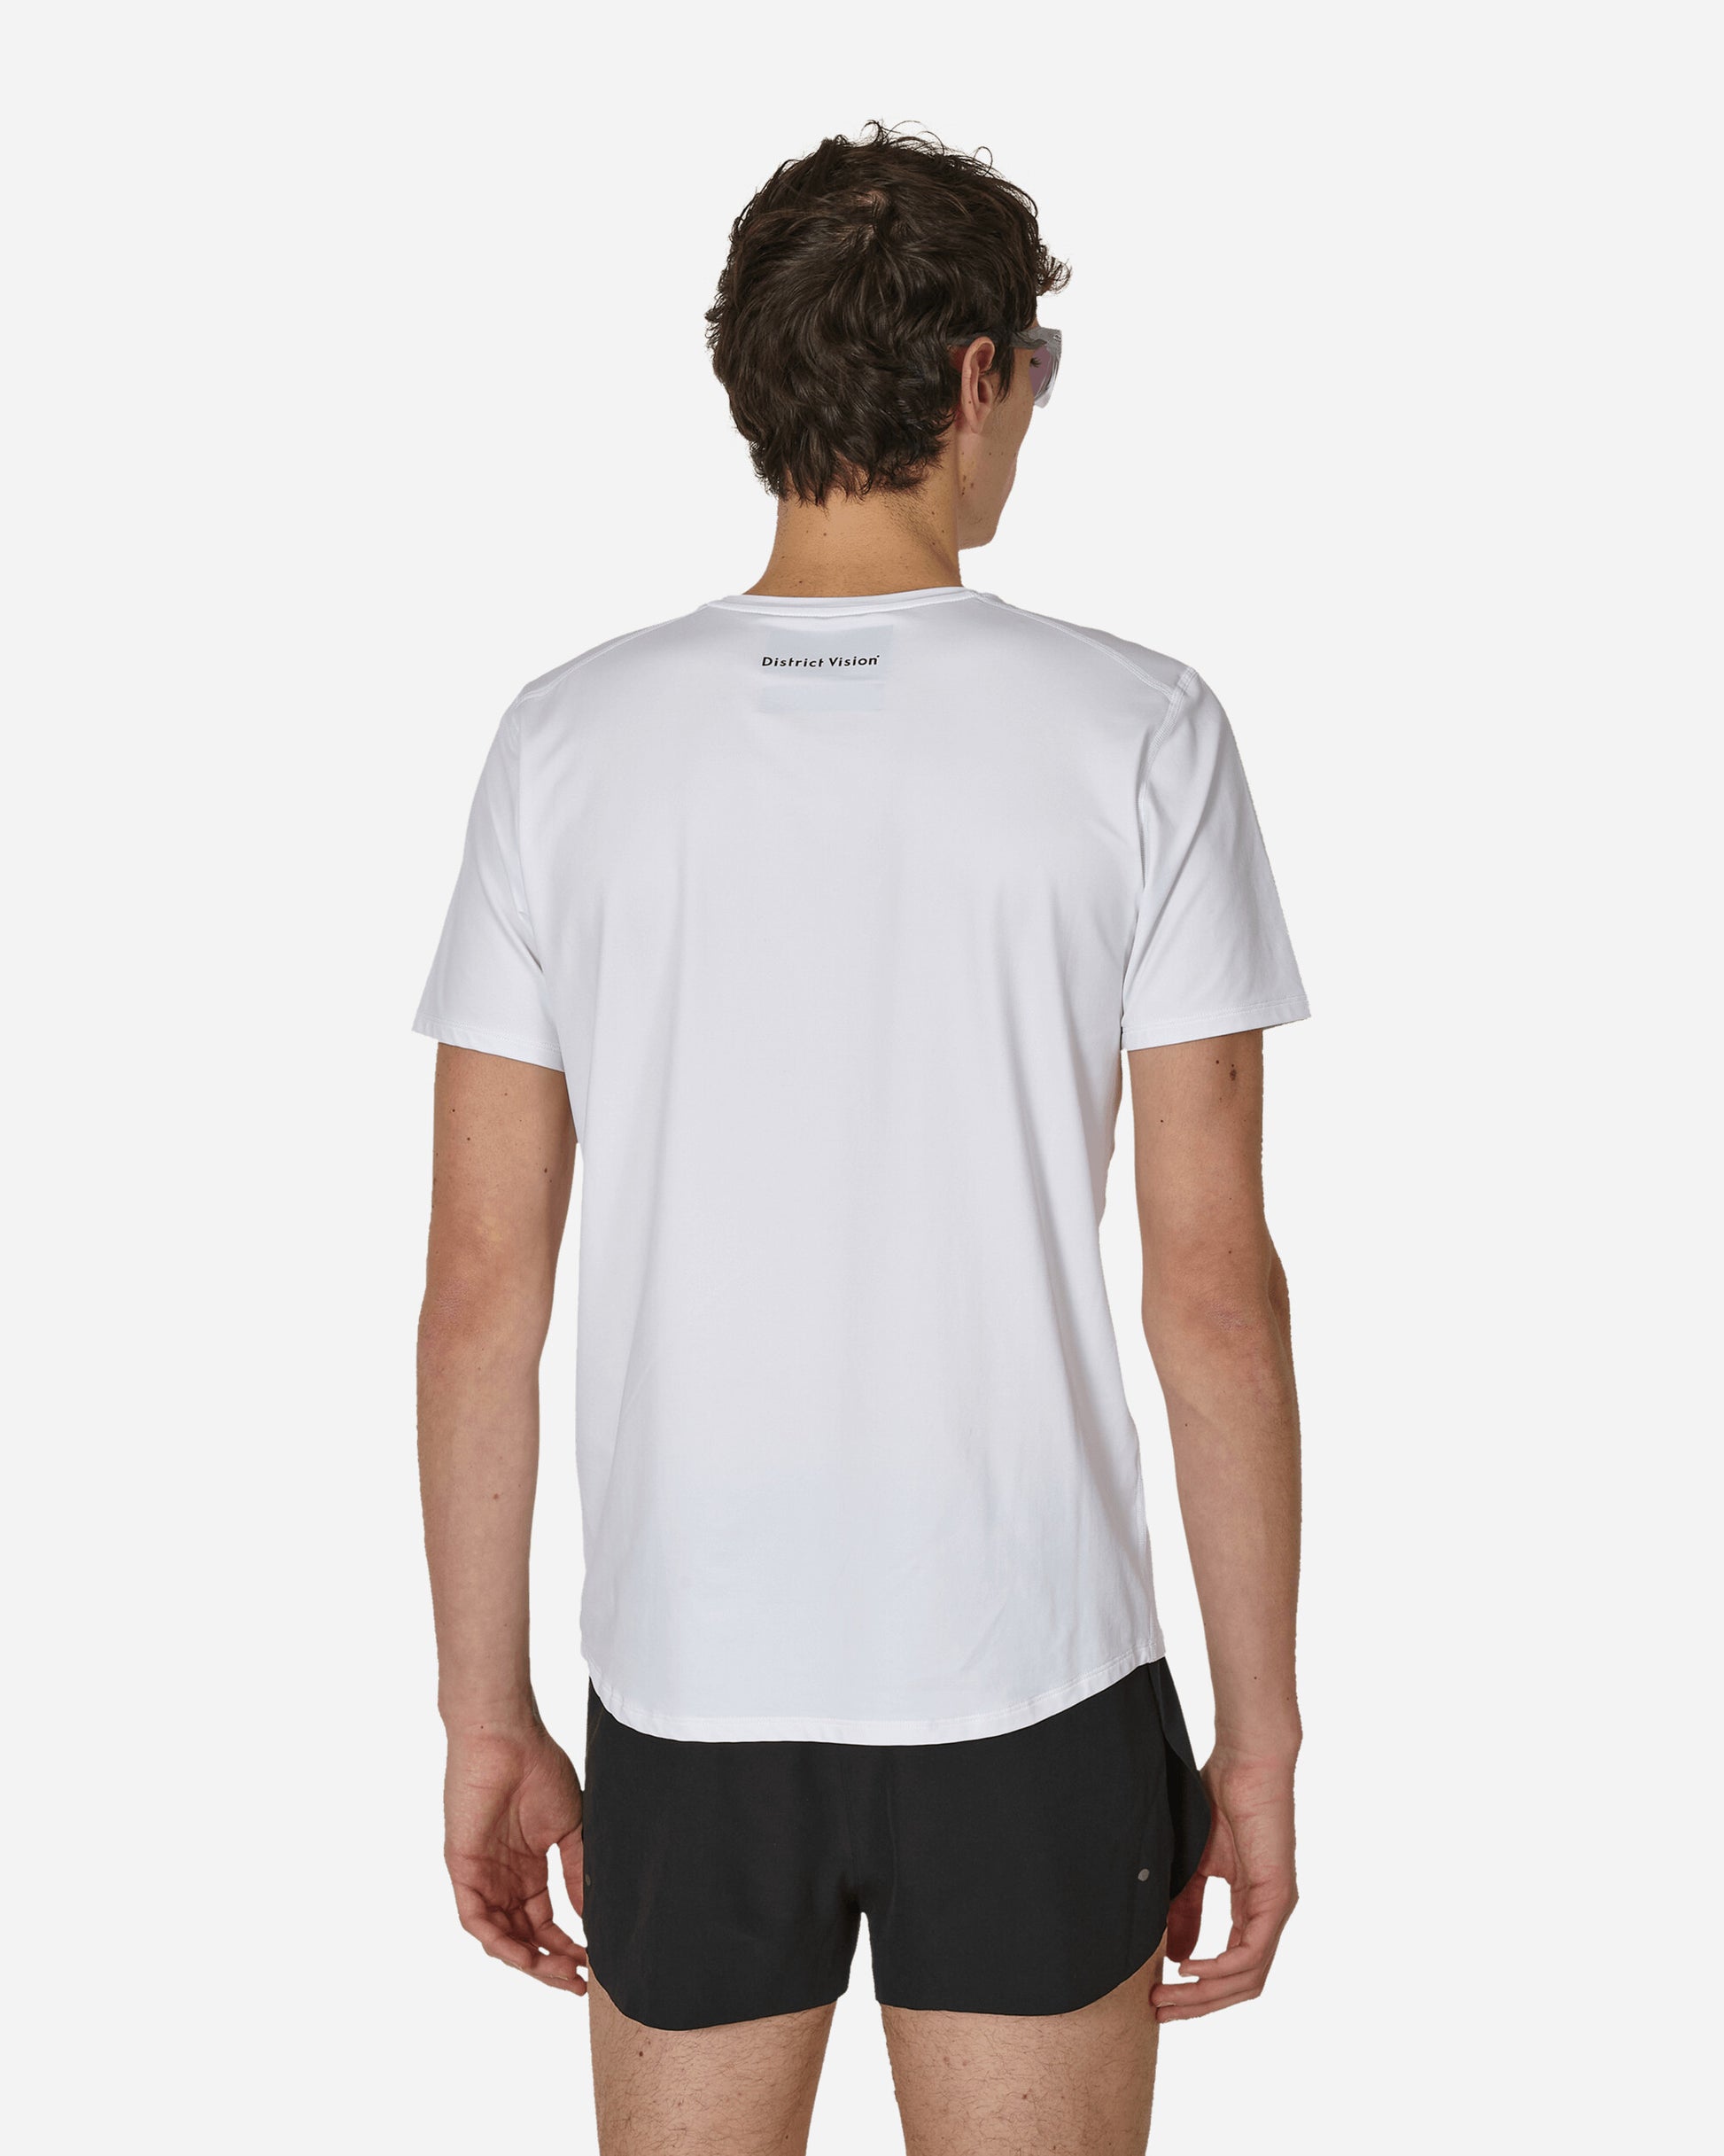 District Vision Lightweight Short Sleeve Shirt White T-Shirts Shortsleeve DV0002-B WHITE